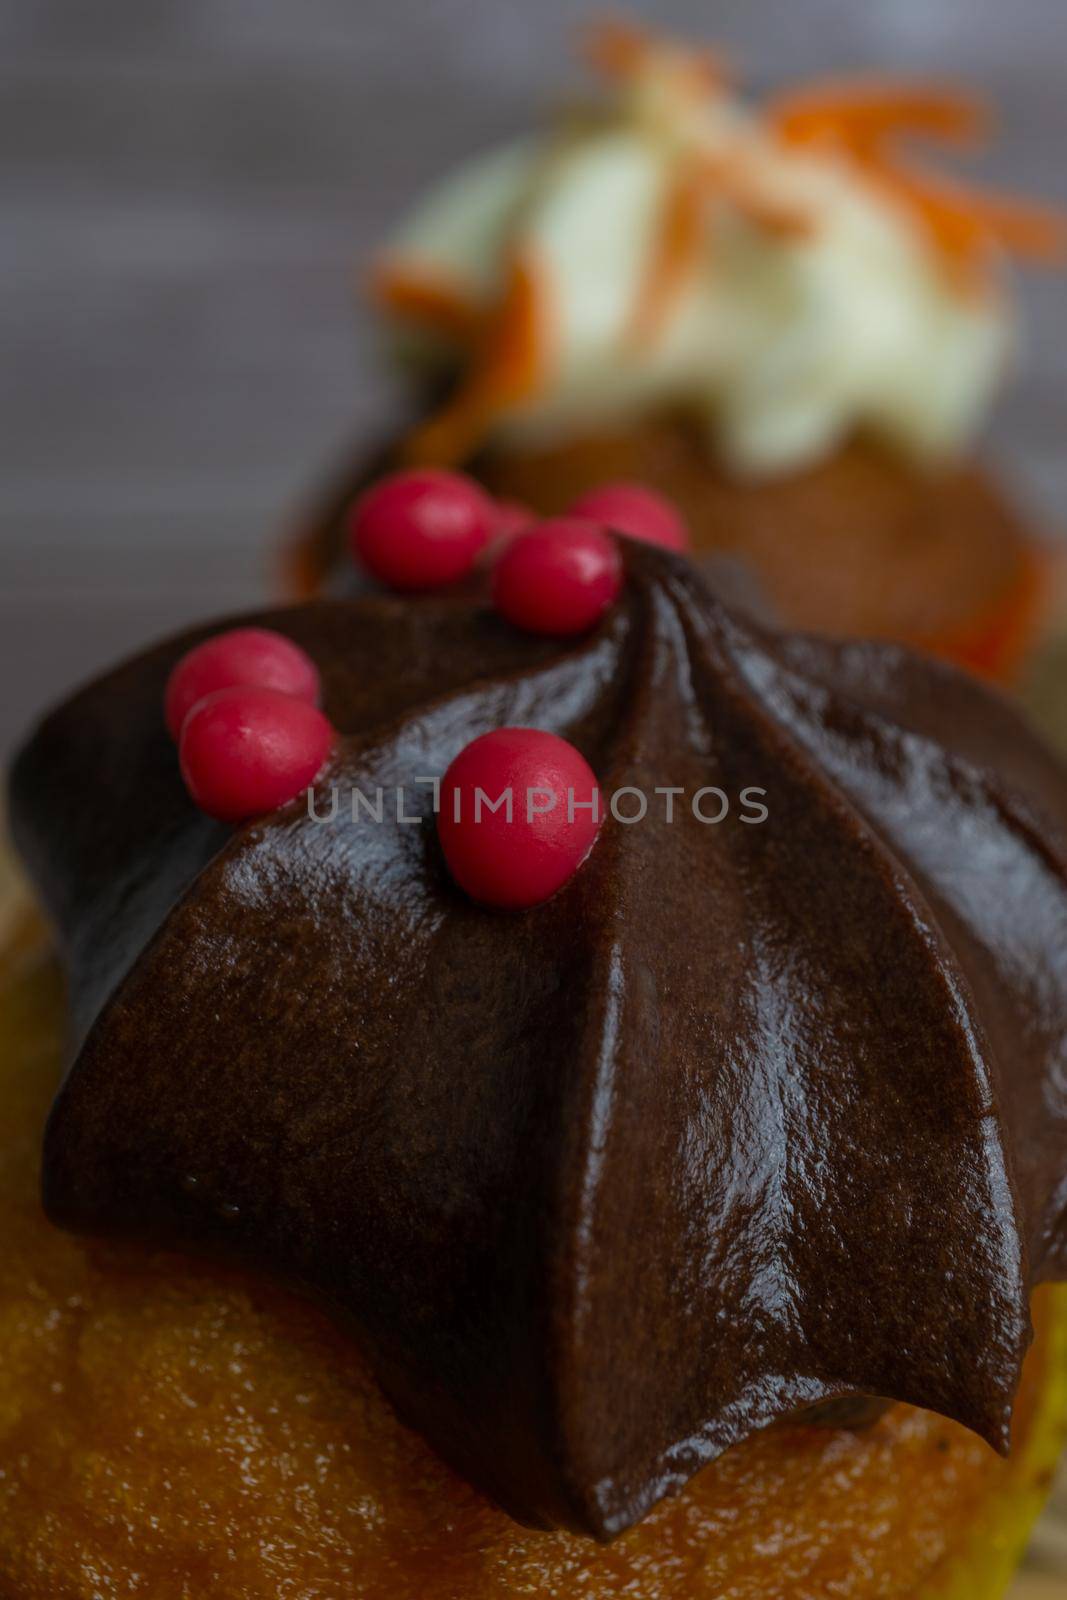 chocolate and cream and carrot cupcakes by joseantona